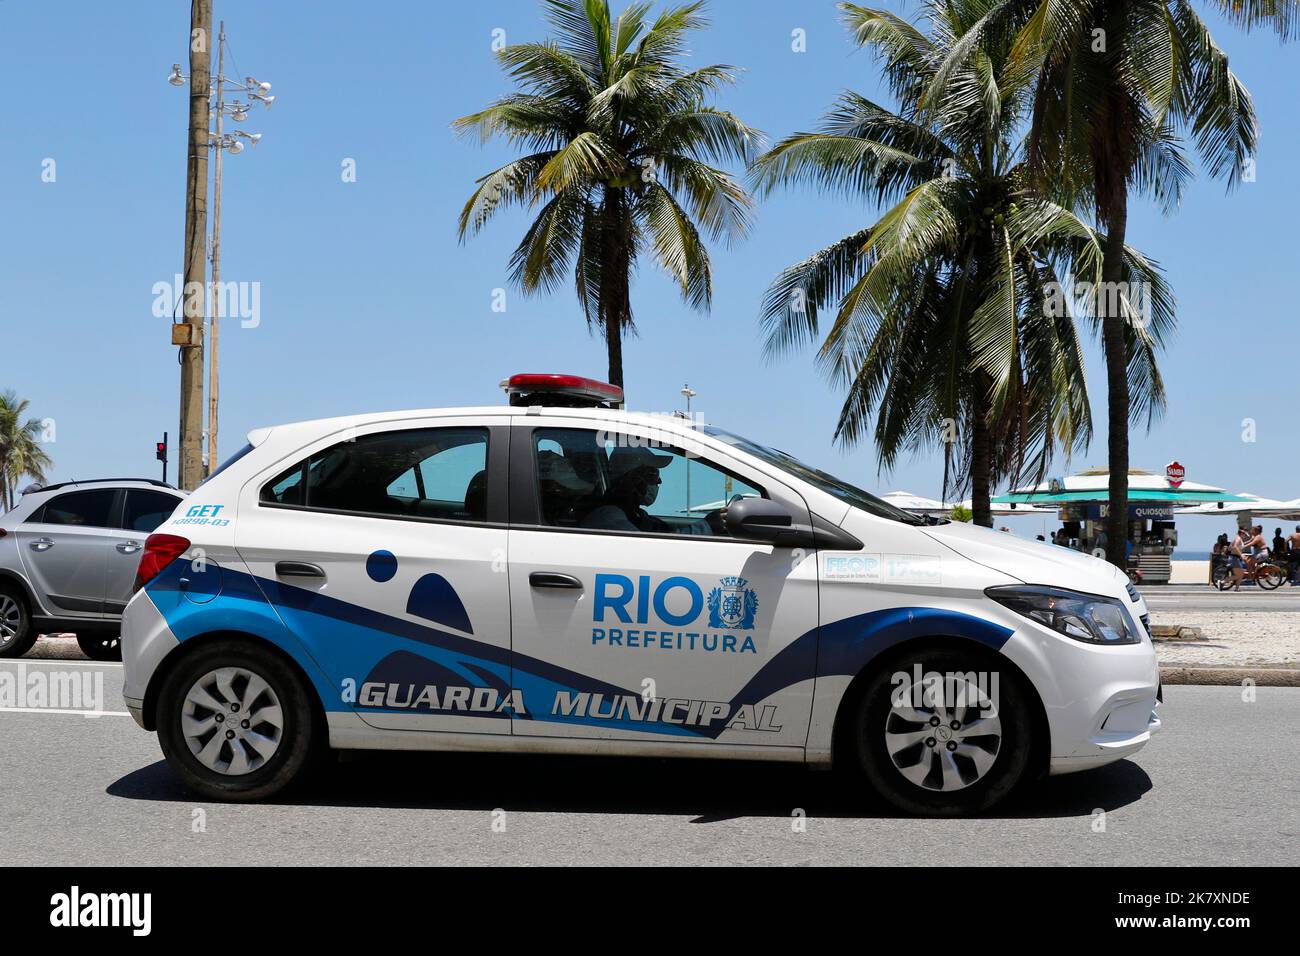 Police car vehicle of Rio de Janeiro Guarda Municipal squad patrolling street, traffic violations law enforcement Stock Photo